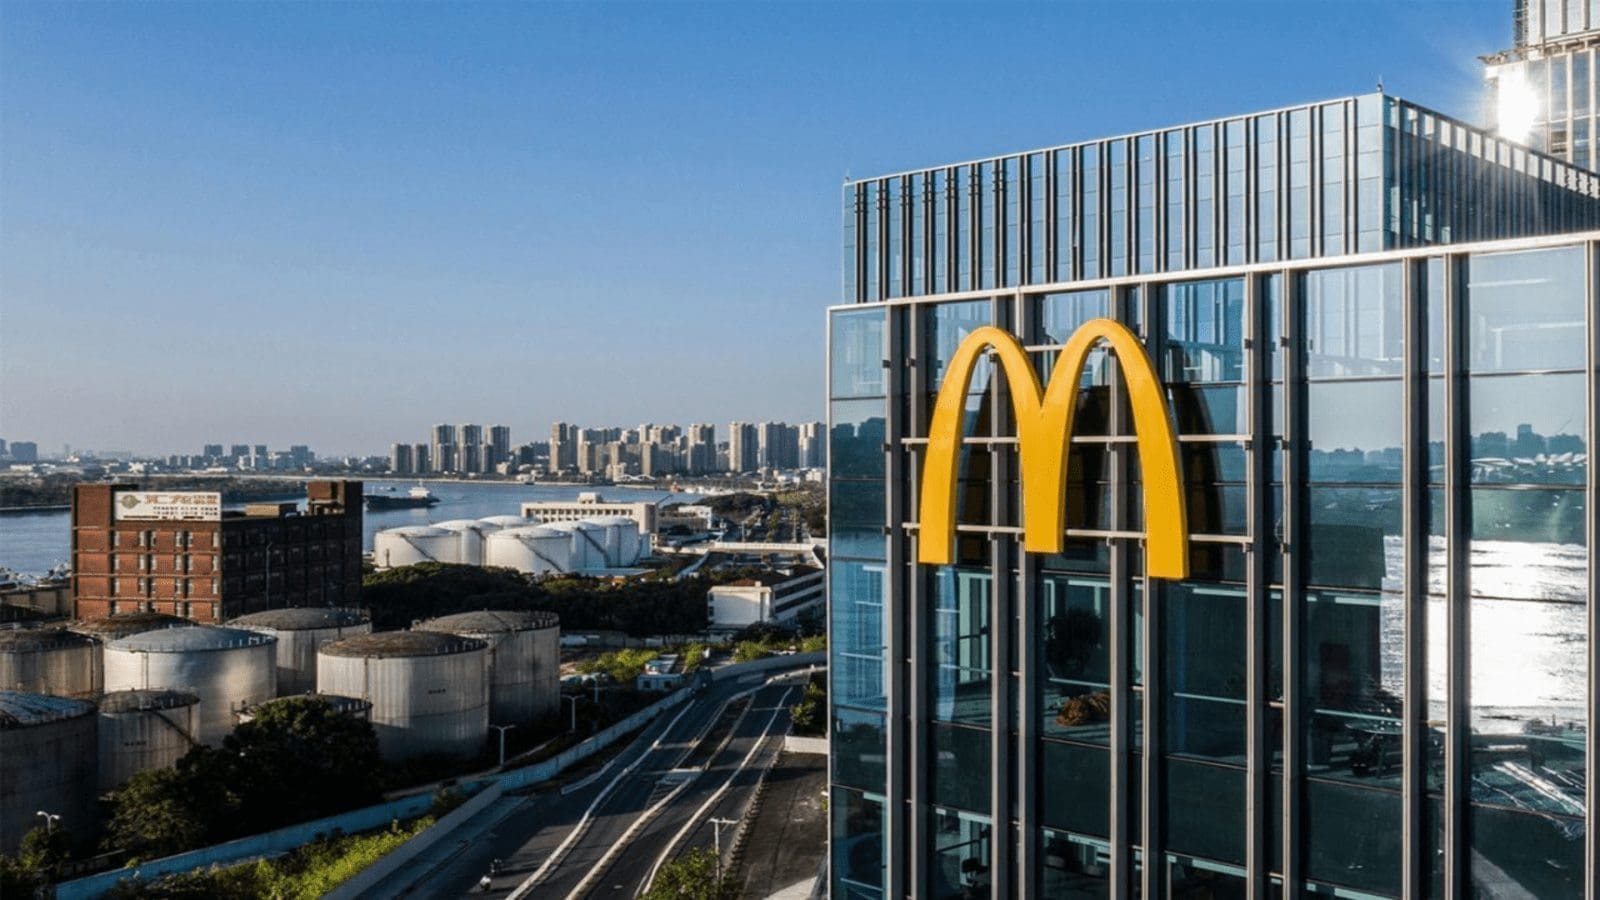 McDonald’s China to train 75,000 restaurant workers in newly opened Hamburger University